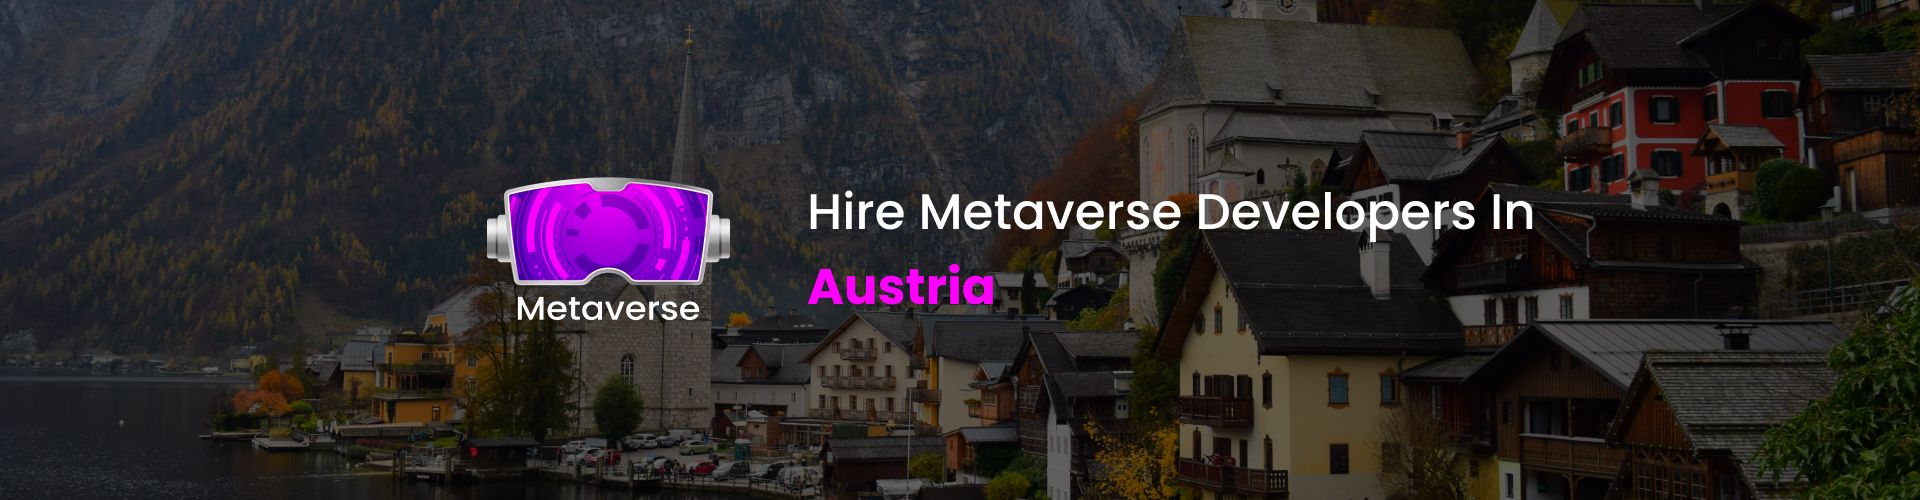 metaverse developers in austria